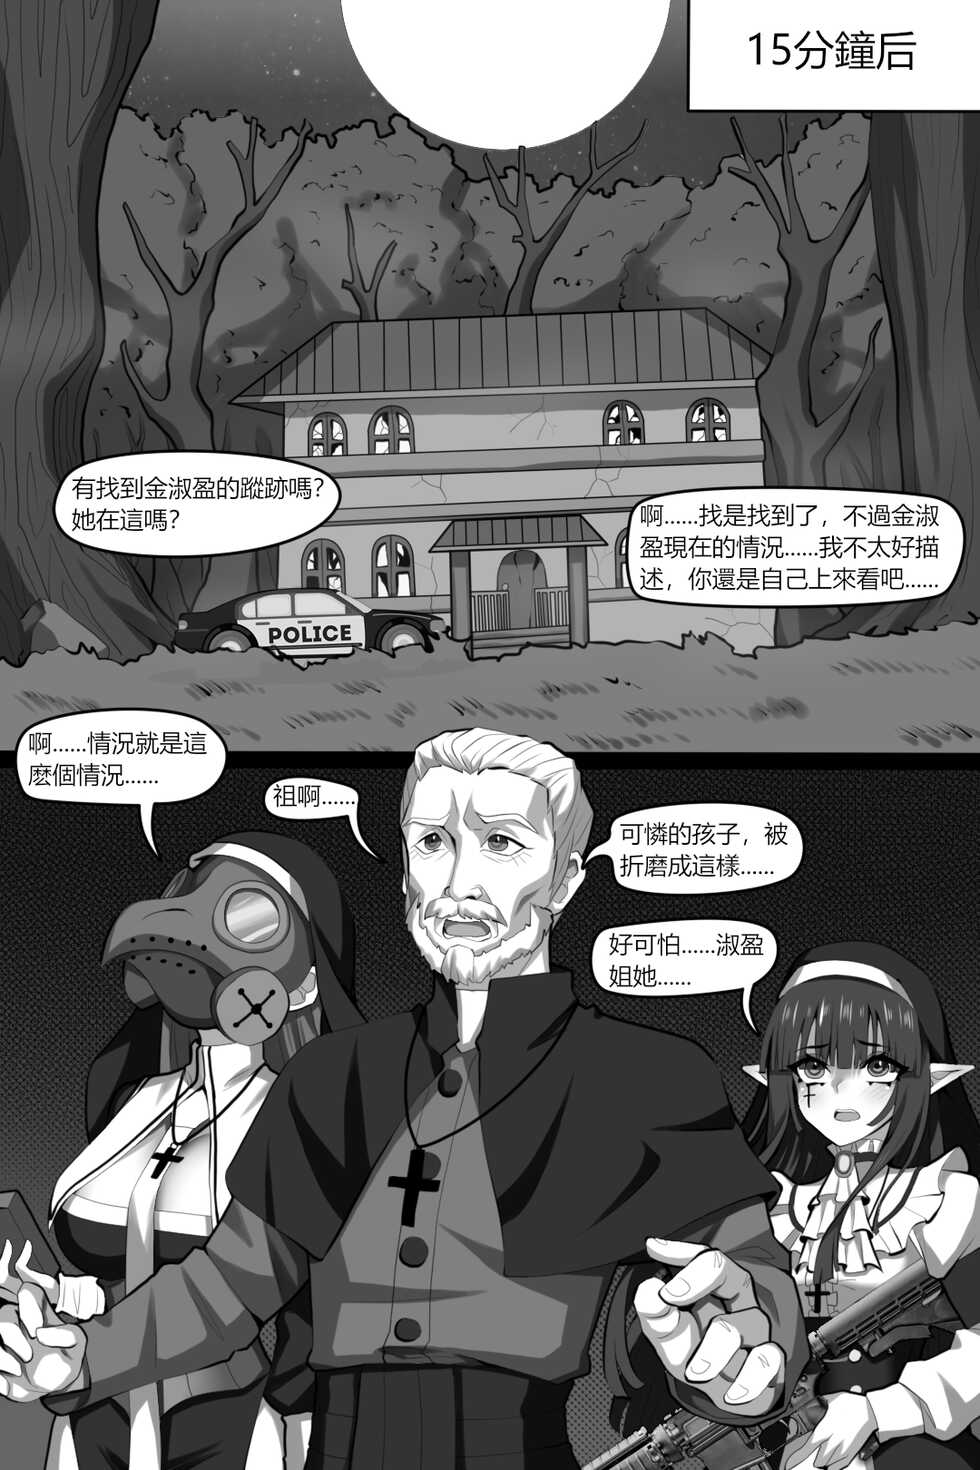 [Wushui]  Bin Lian City Stories Ch2: Exorcist Nun. - Page 27